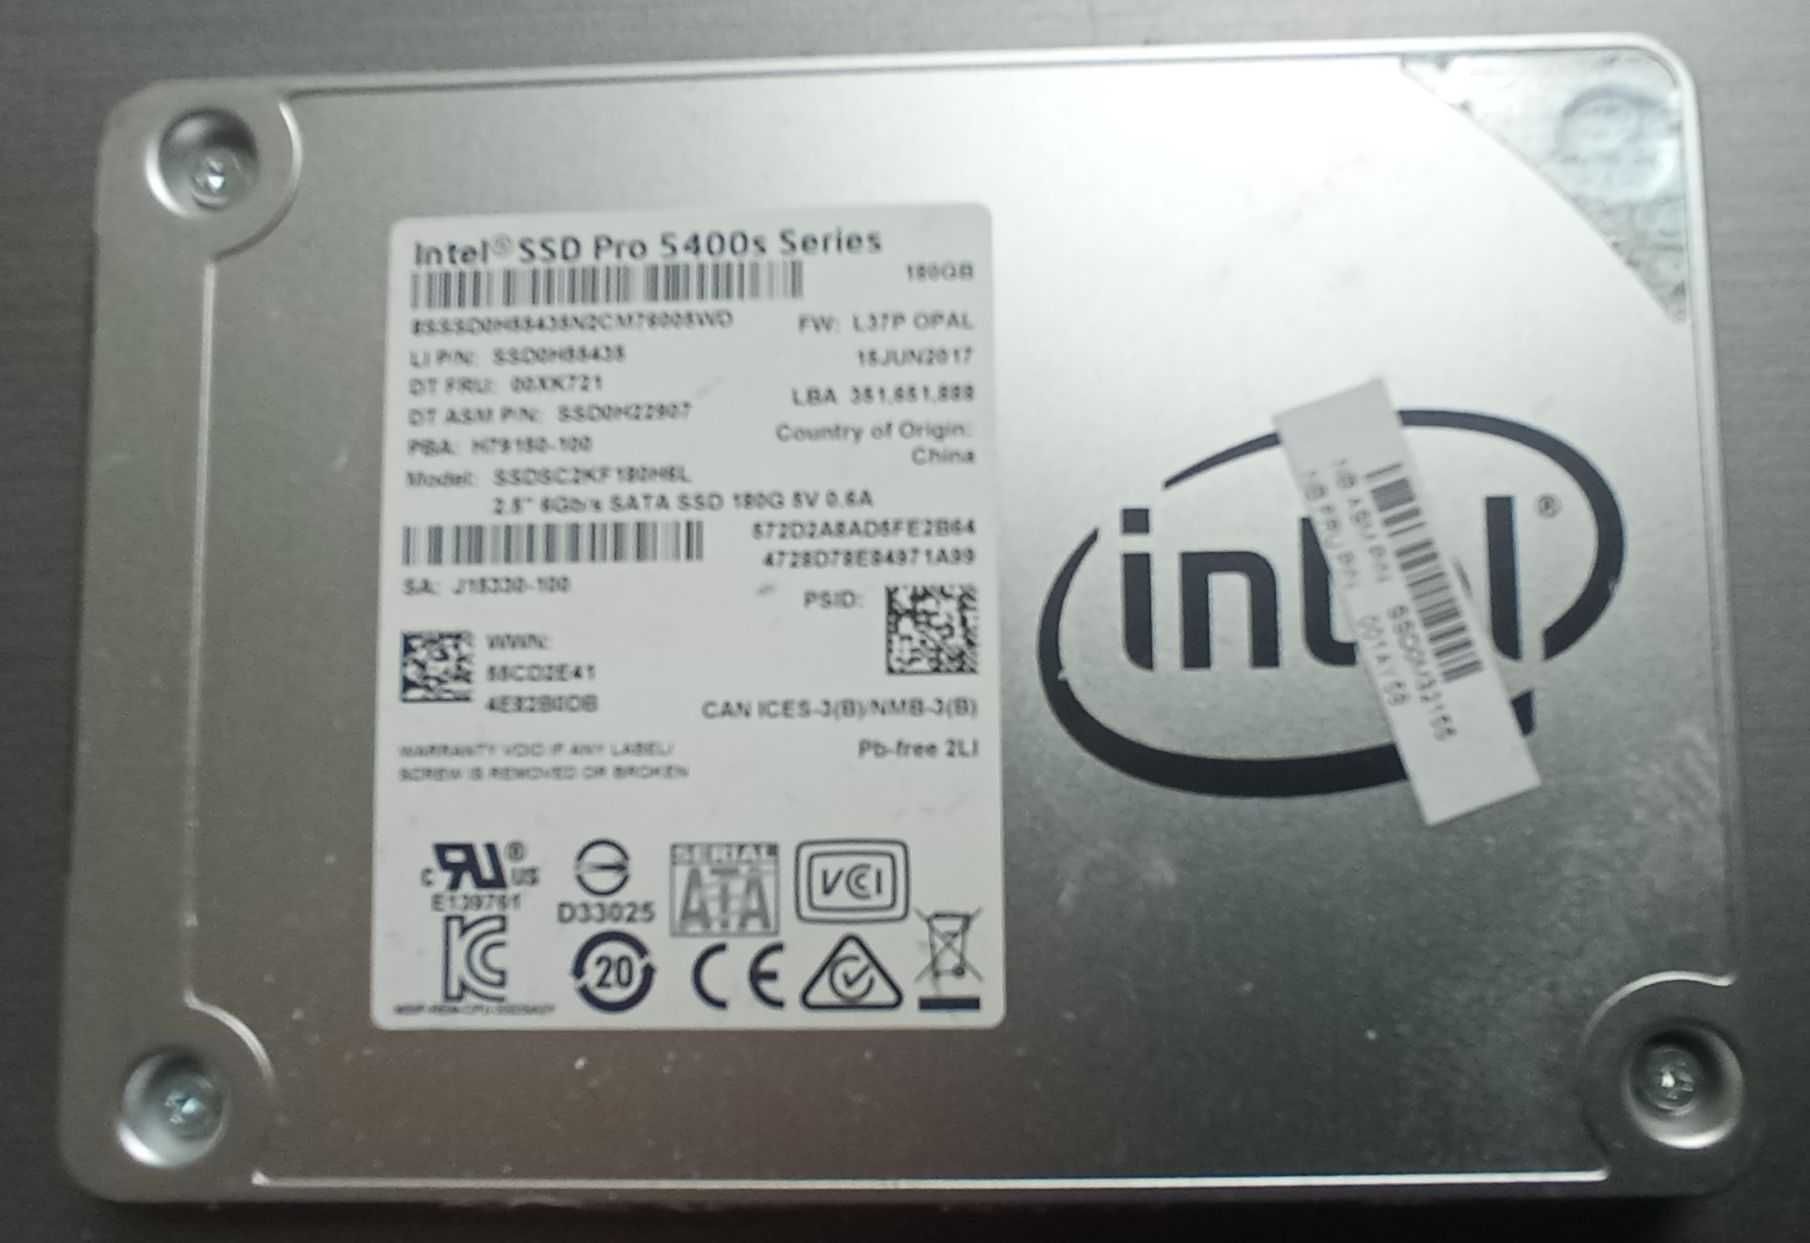 laptop Dell E6410: i5